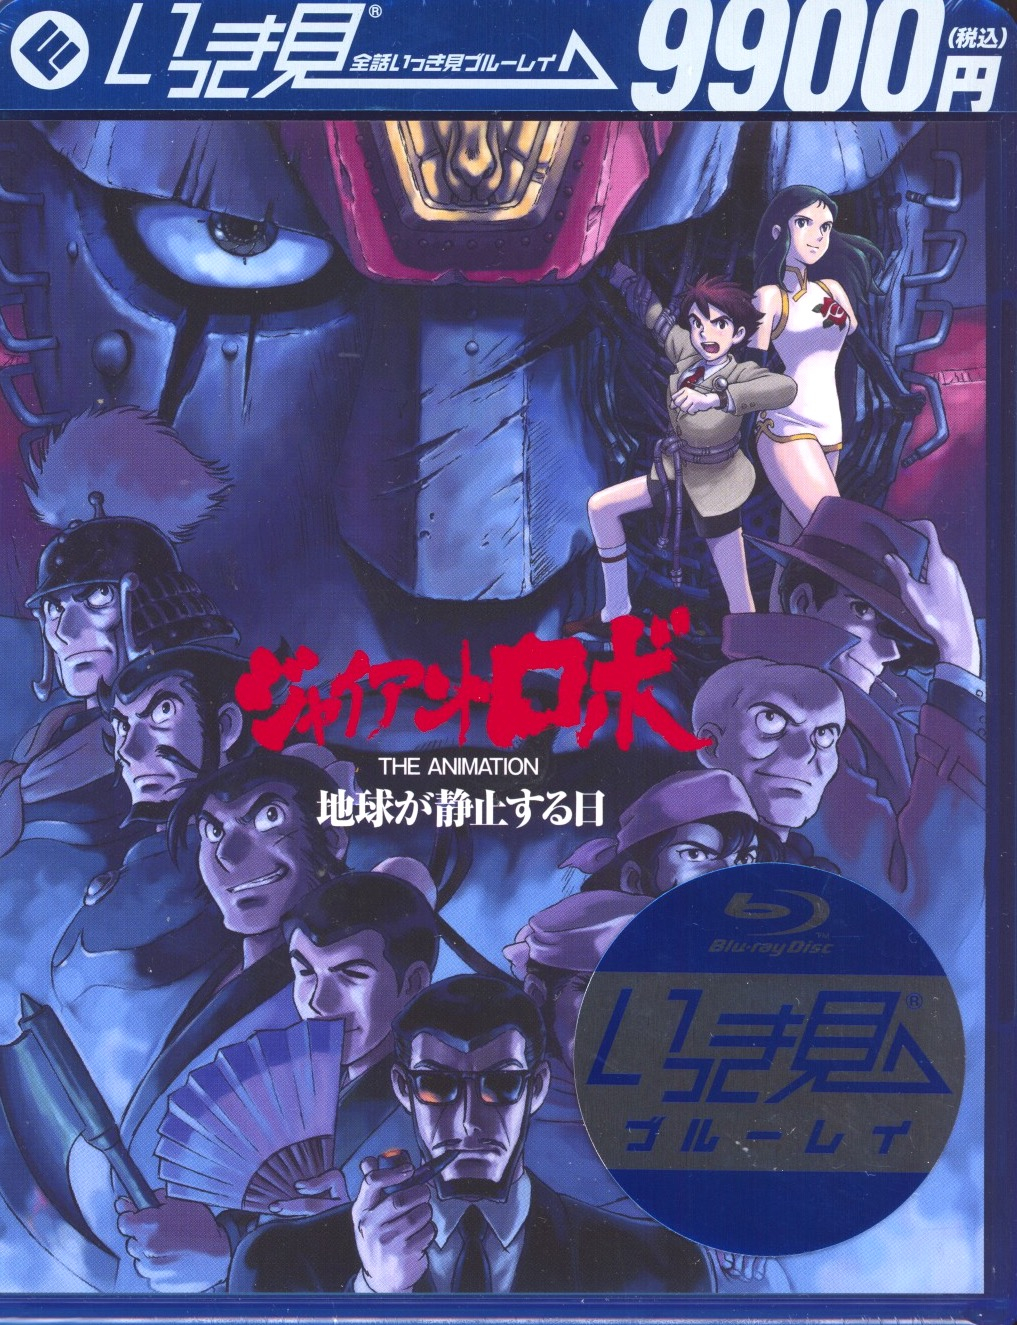 Giant Robo BluRay Review A Retro Styled Mecha Anime Masterpiece